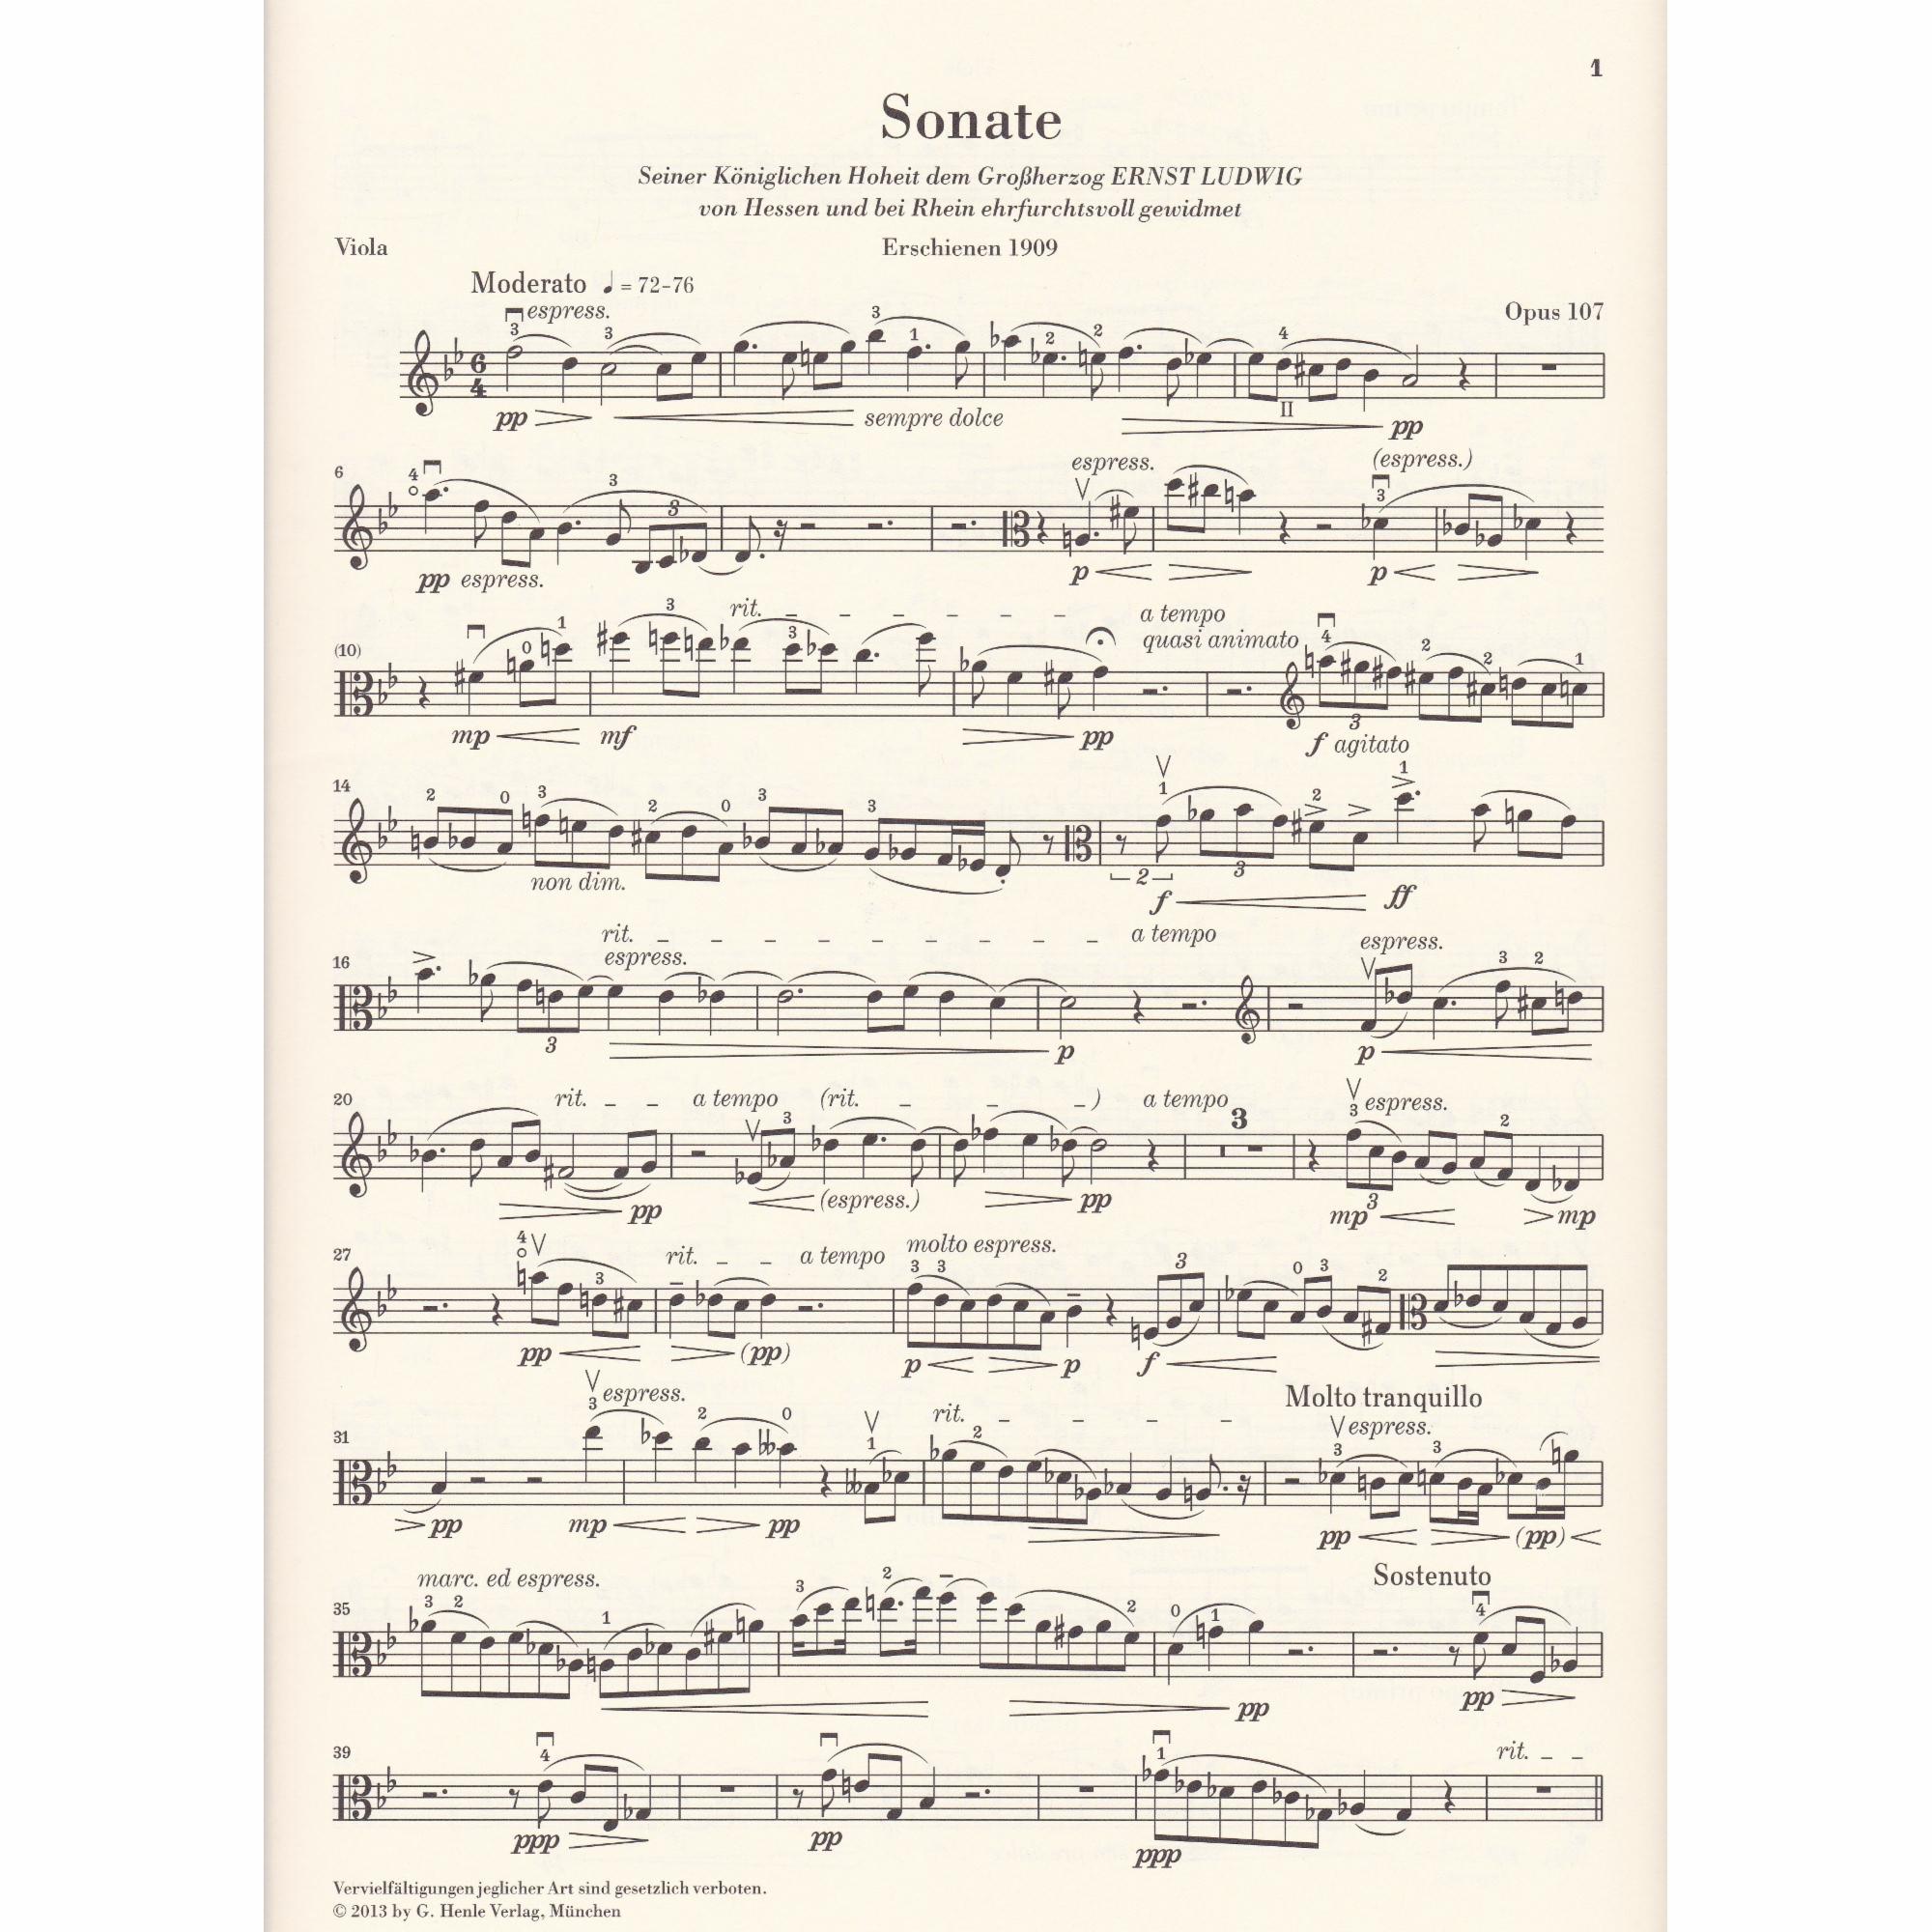 Viola Sonata in B-Flat Major, Op. 107